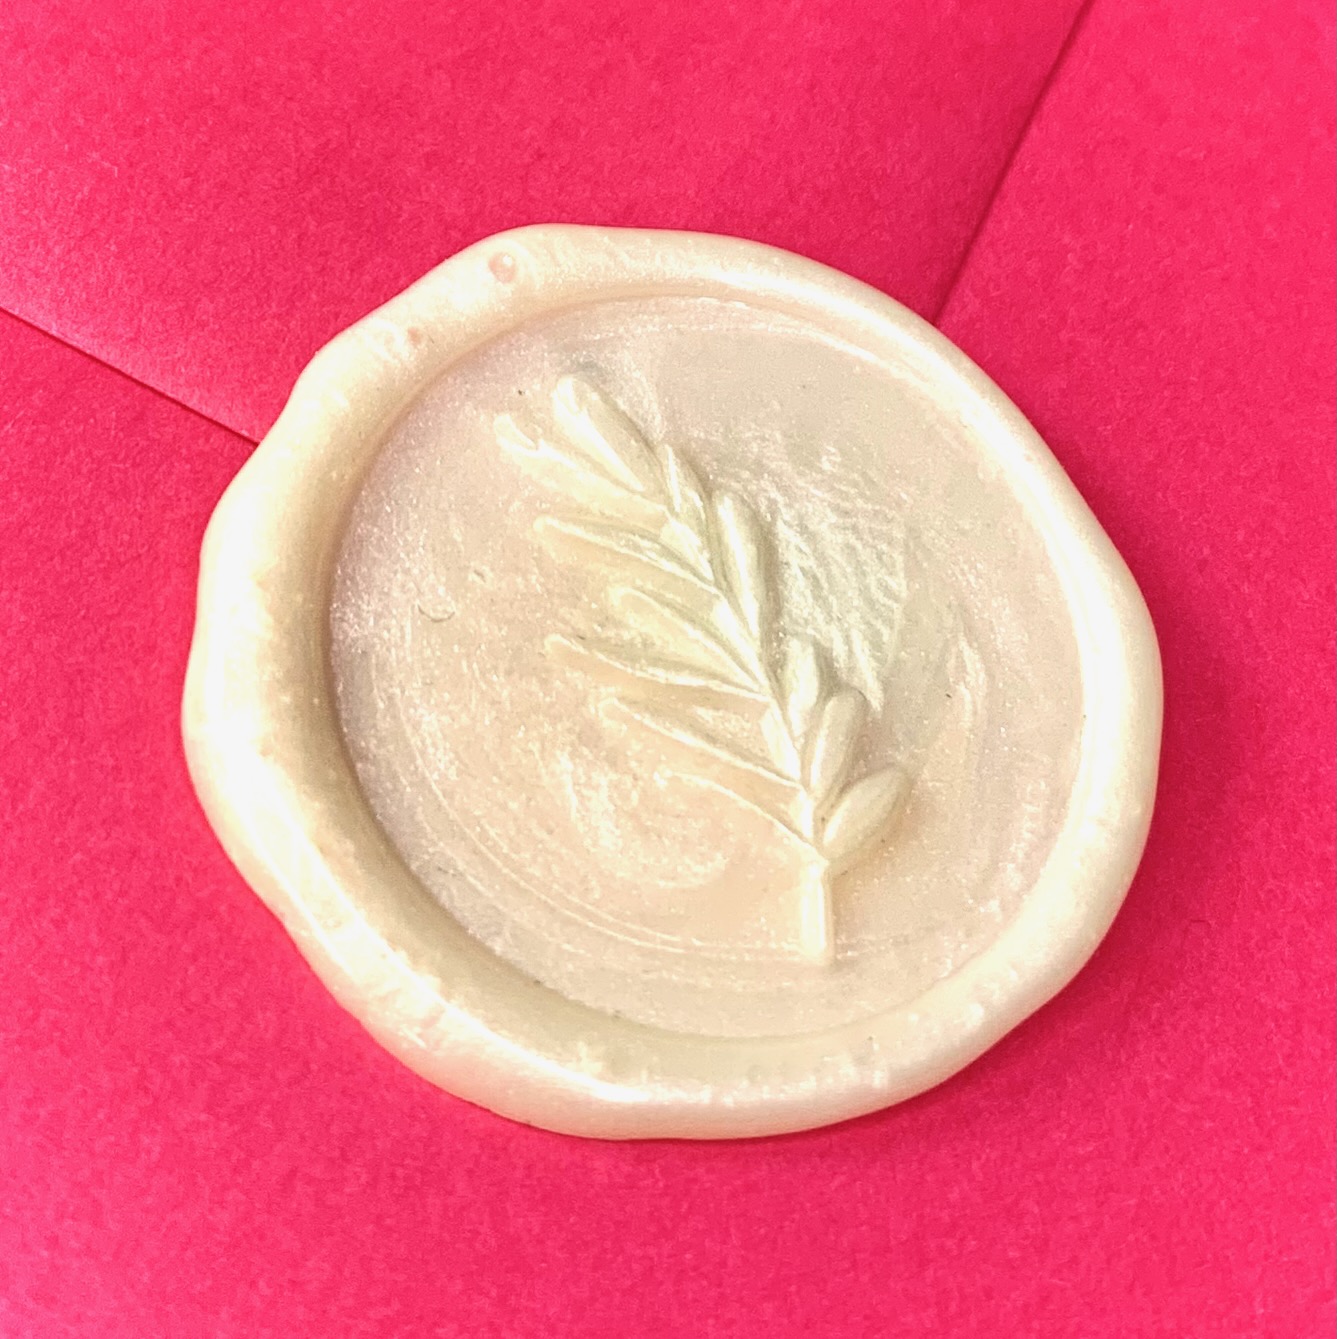 white wax seal with foliage design